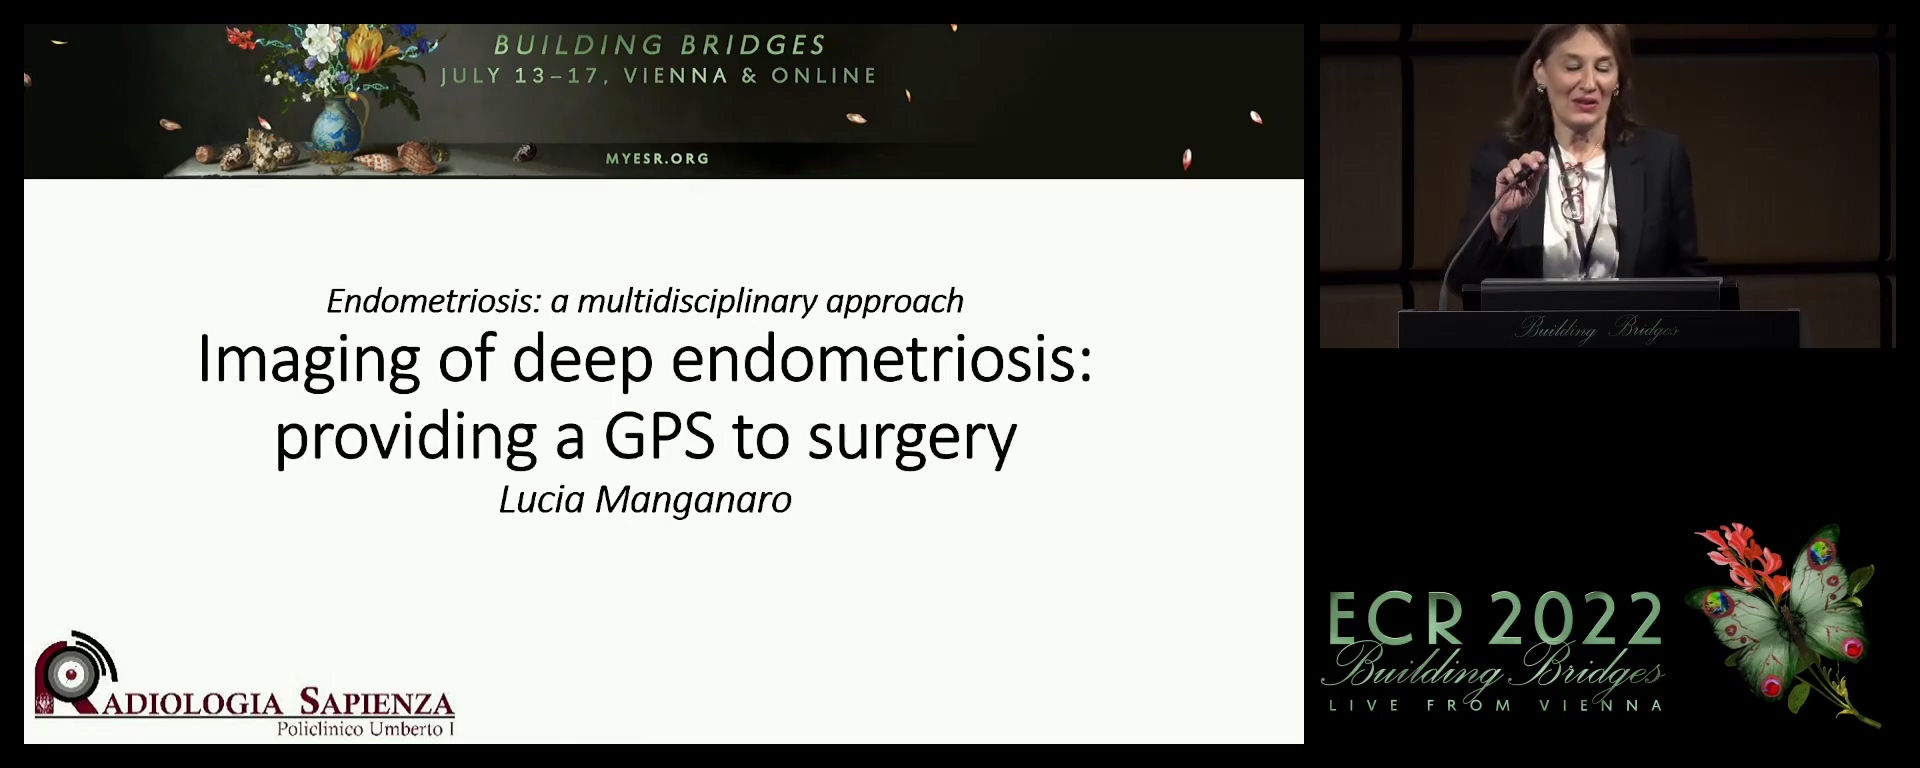 Imaging of deep endometriosis: providing a GPS to surgery - Lucia Manganaro, Rome / IT